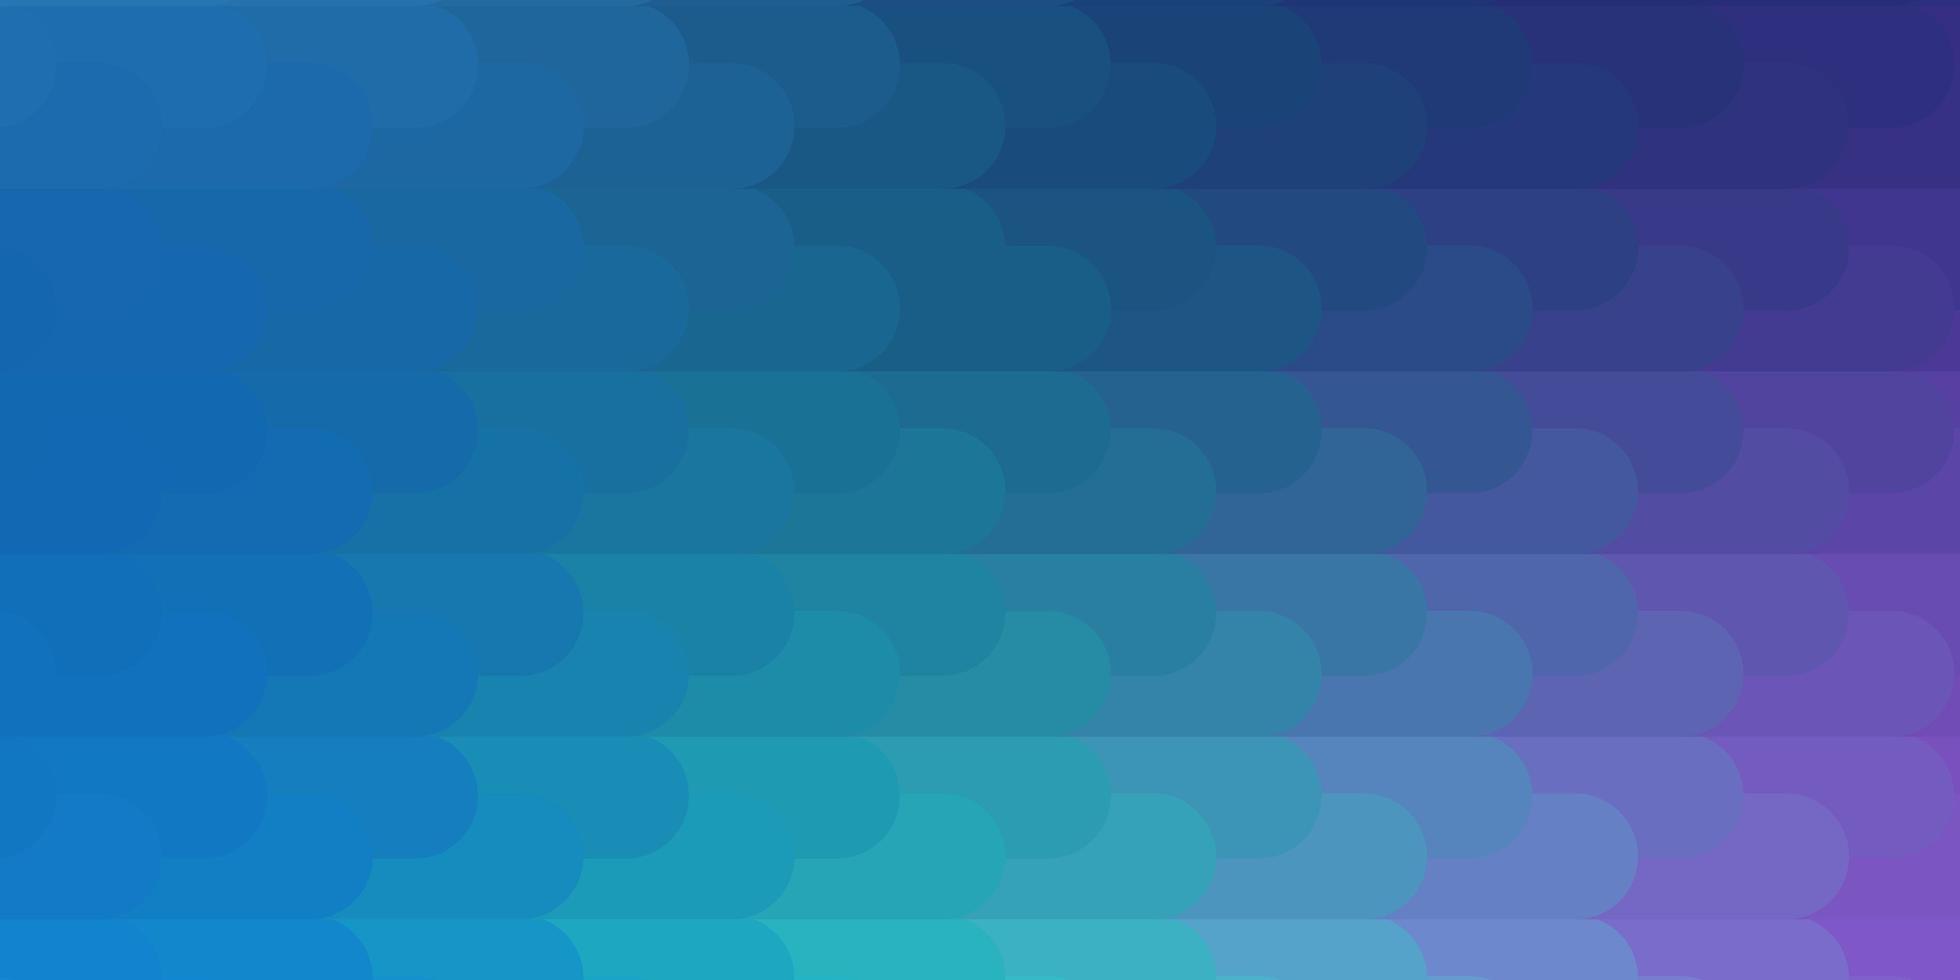 hellrosa, blaue Vektorschablone mit Linien. vektor